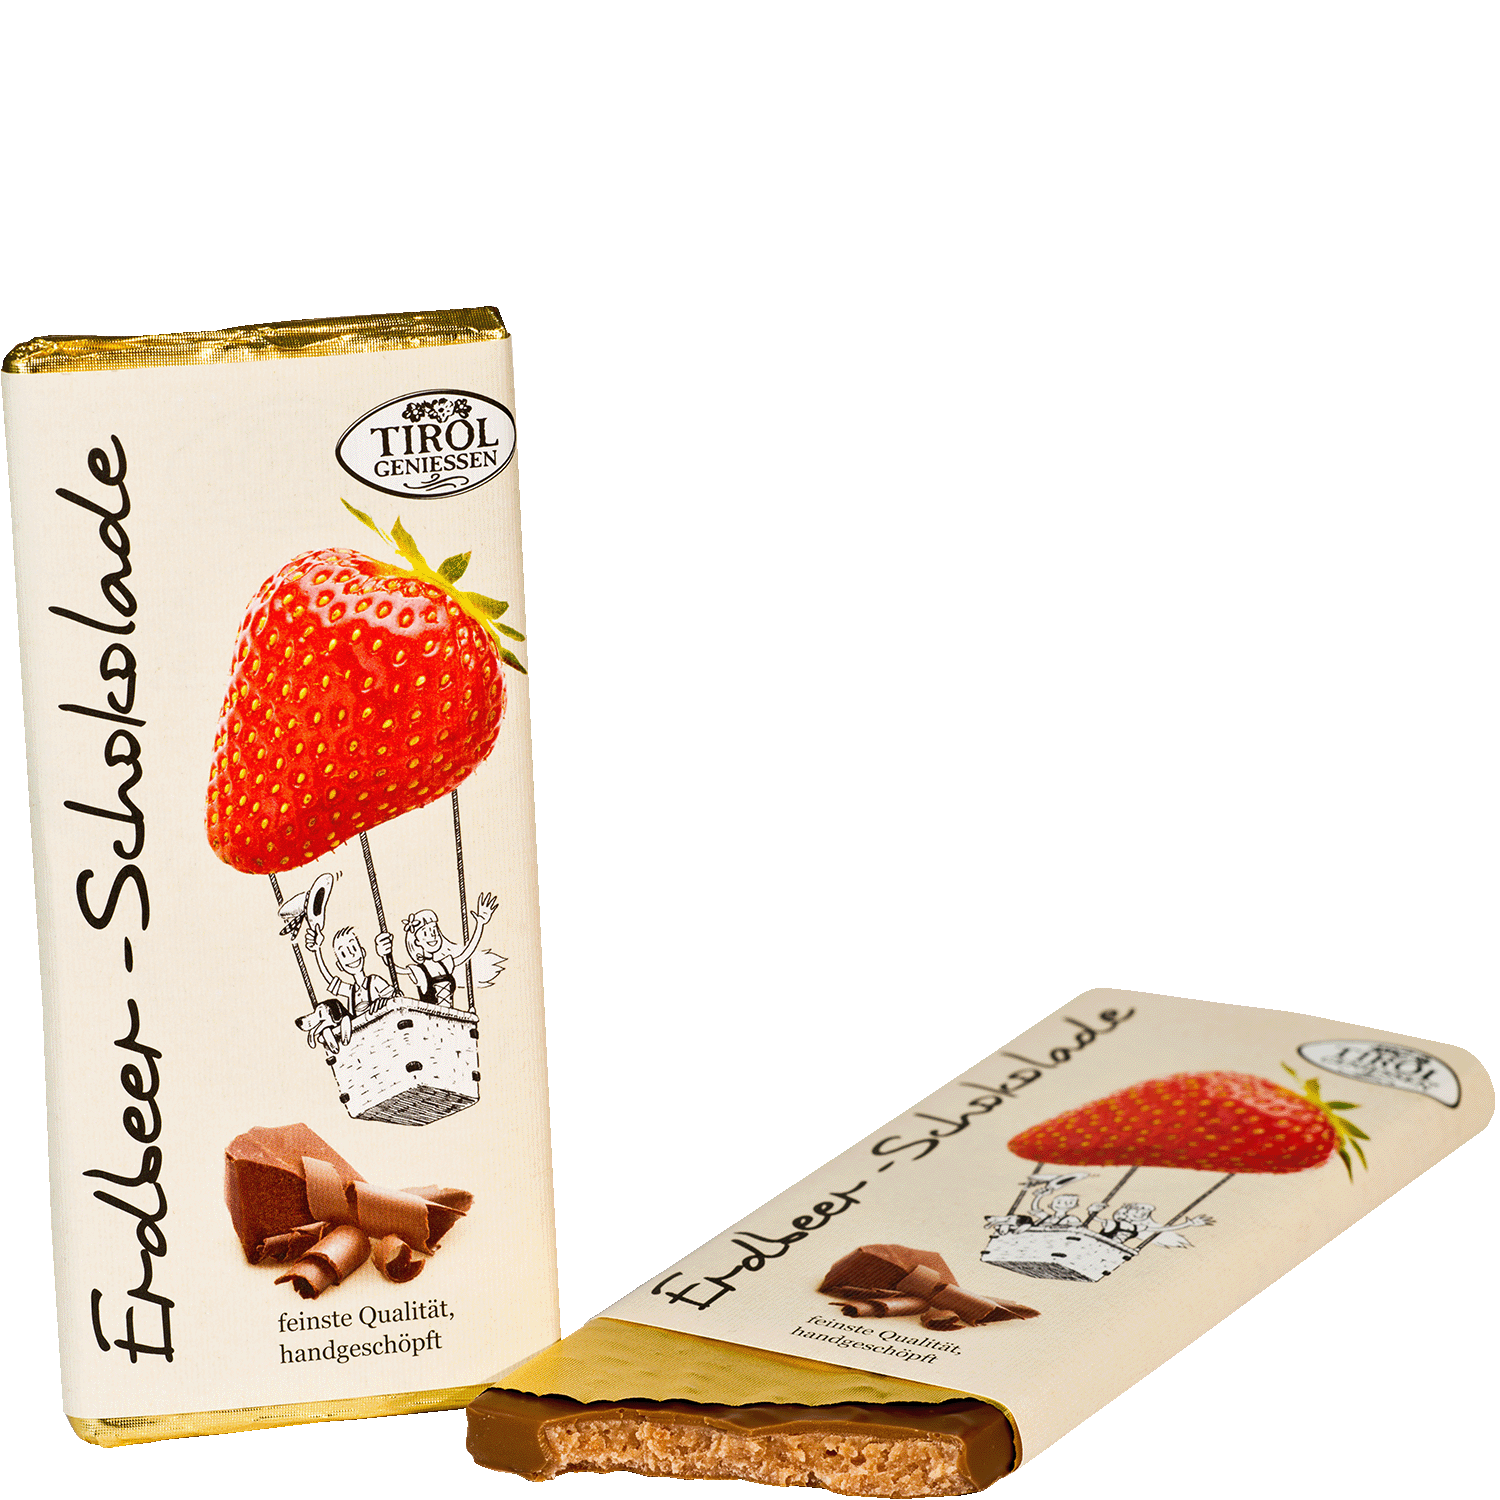 Strawberry Chocolate from Austria from Tirol Geniessen